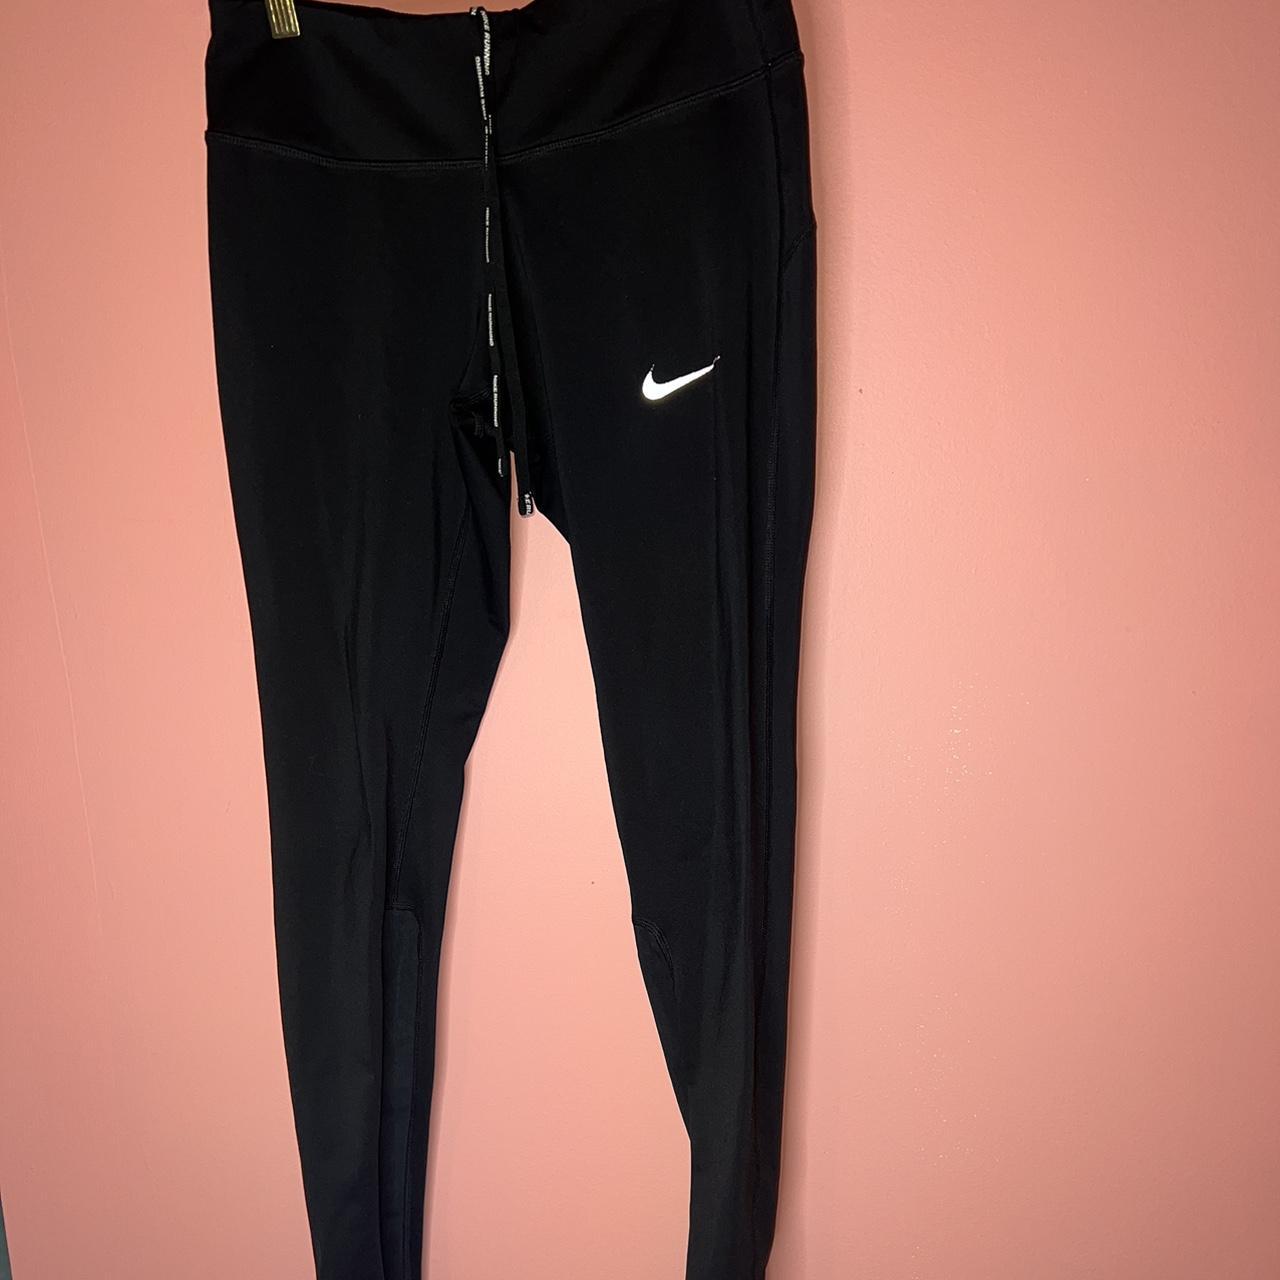 Nike leggings - Depop